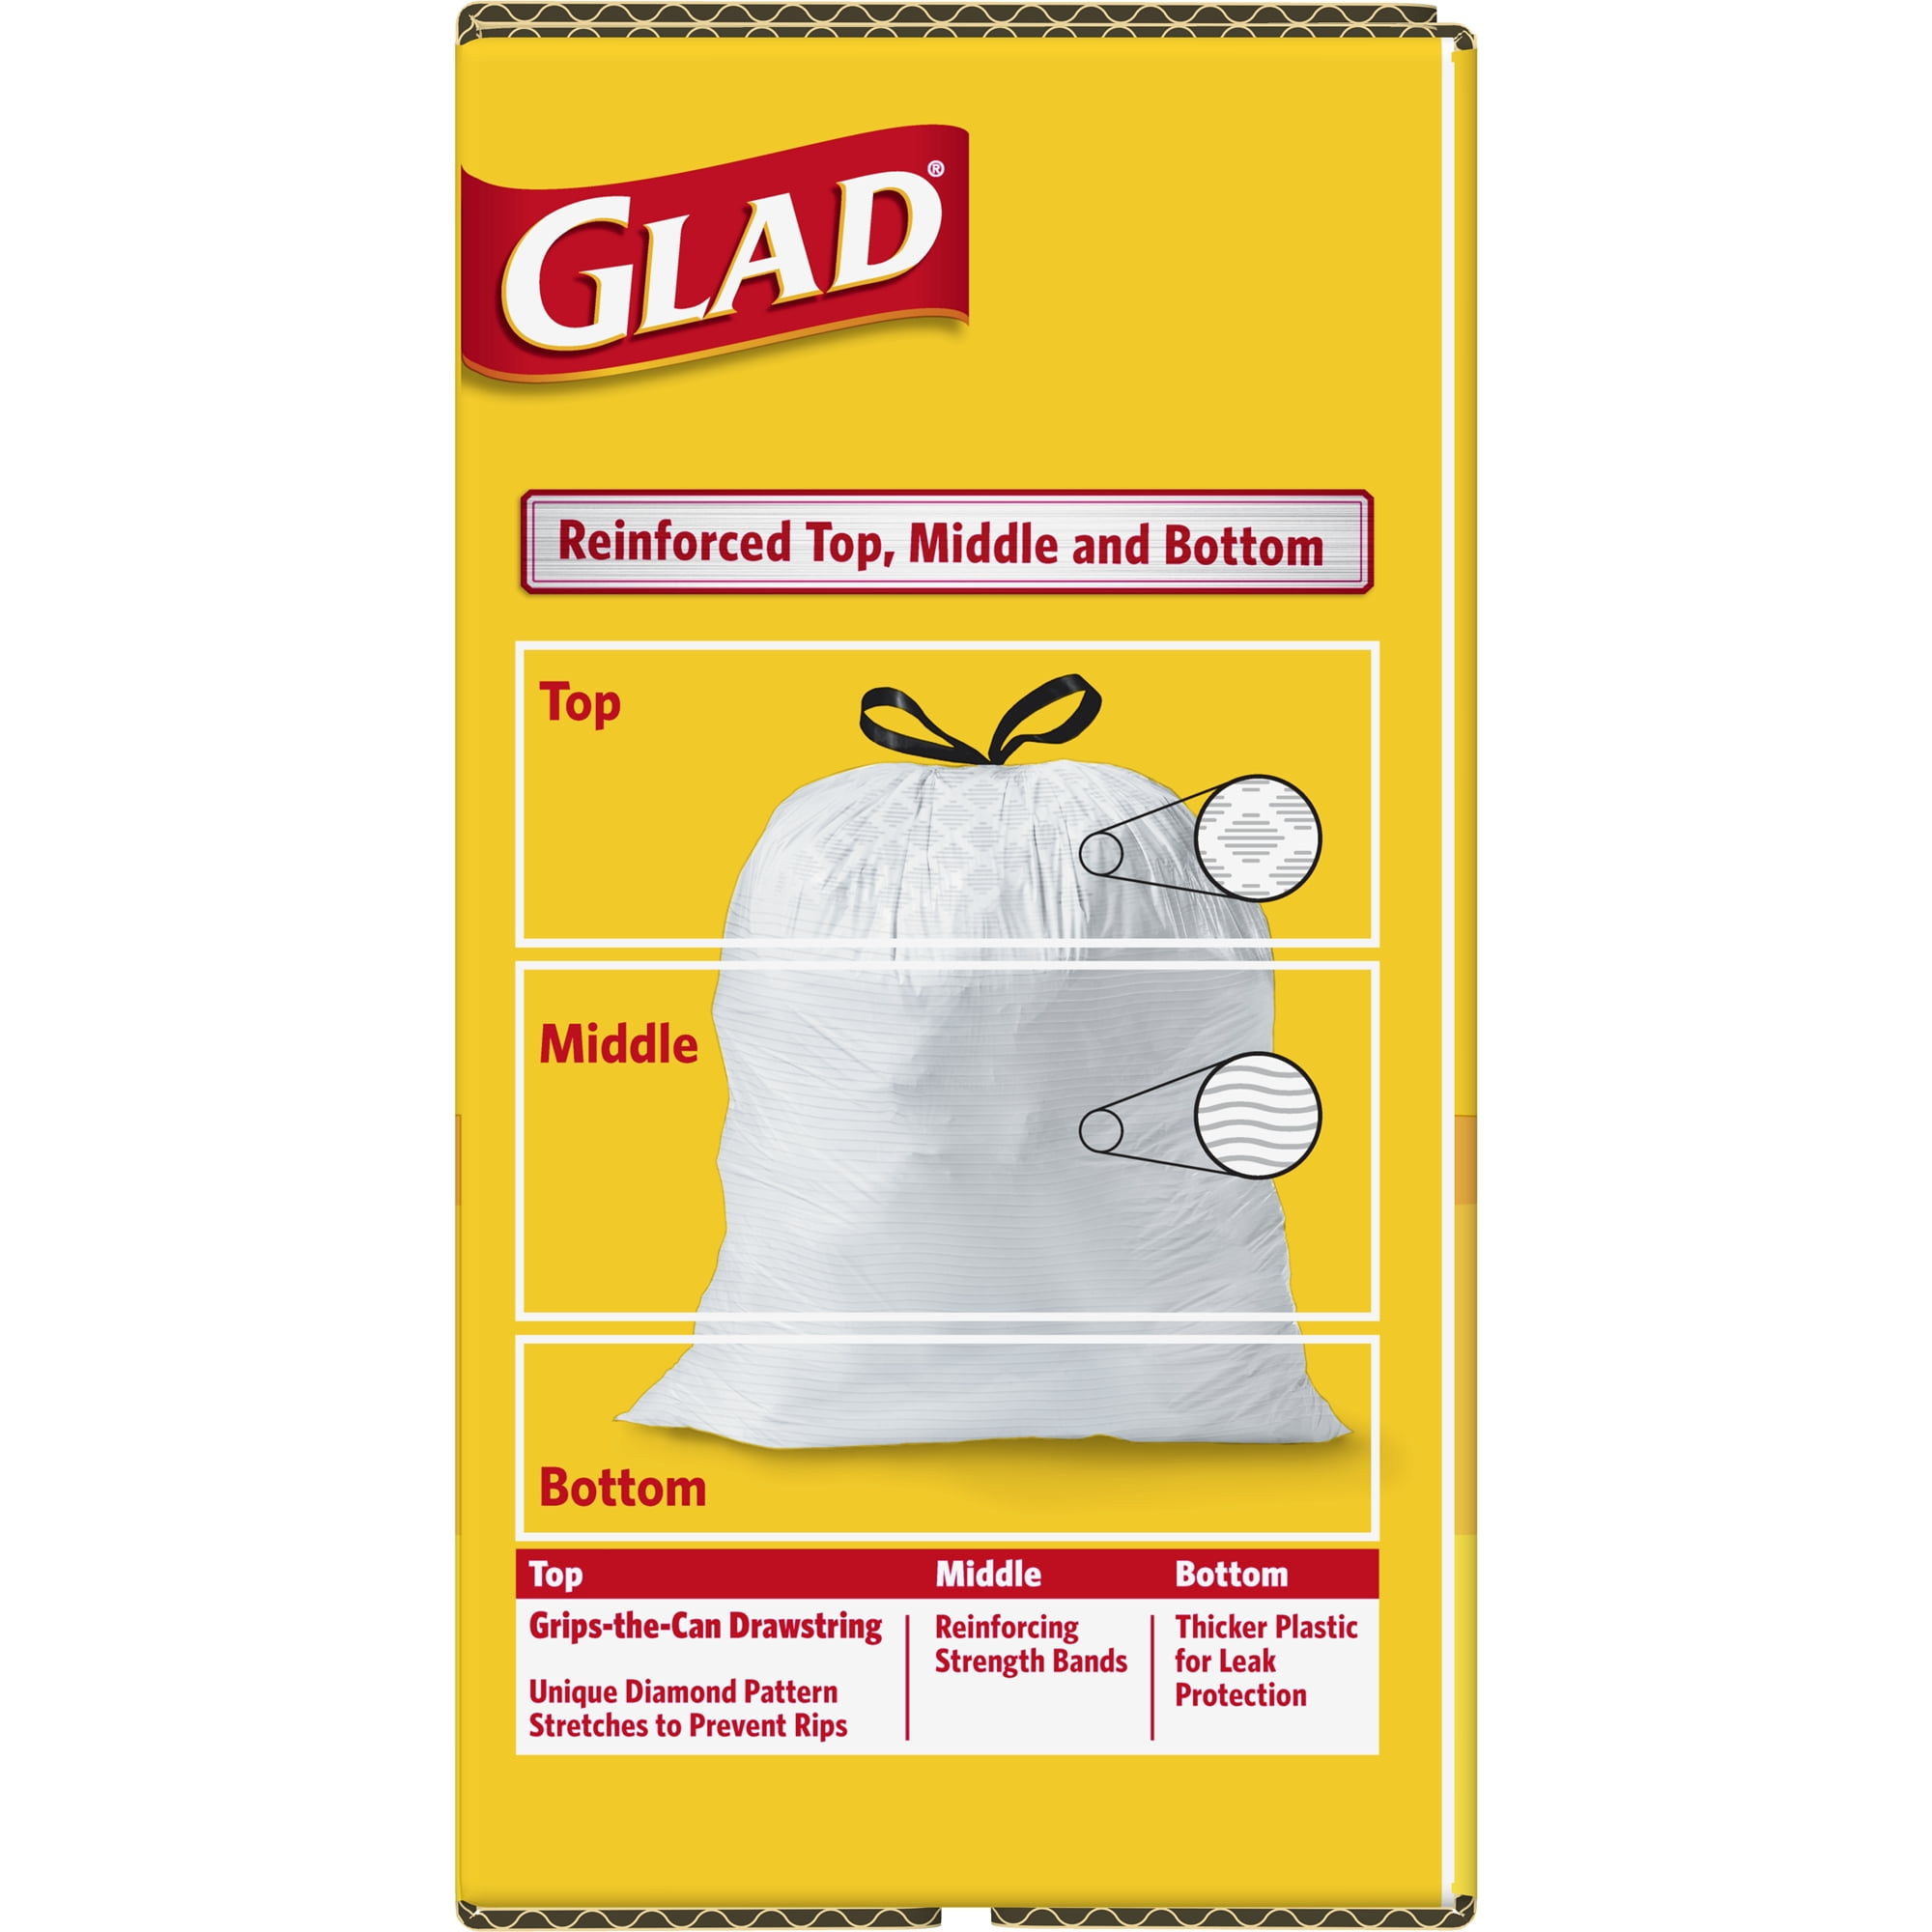 Glad® Tall Kitchen Quick-Tie® Trash Bags - 13 Gallon White Trash Bag – 15  Count, Plastic Bags